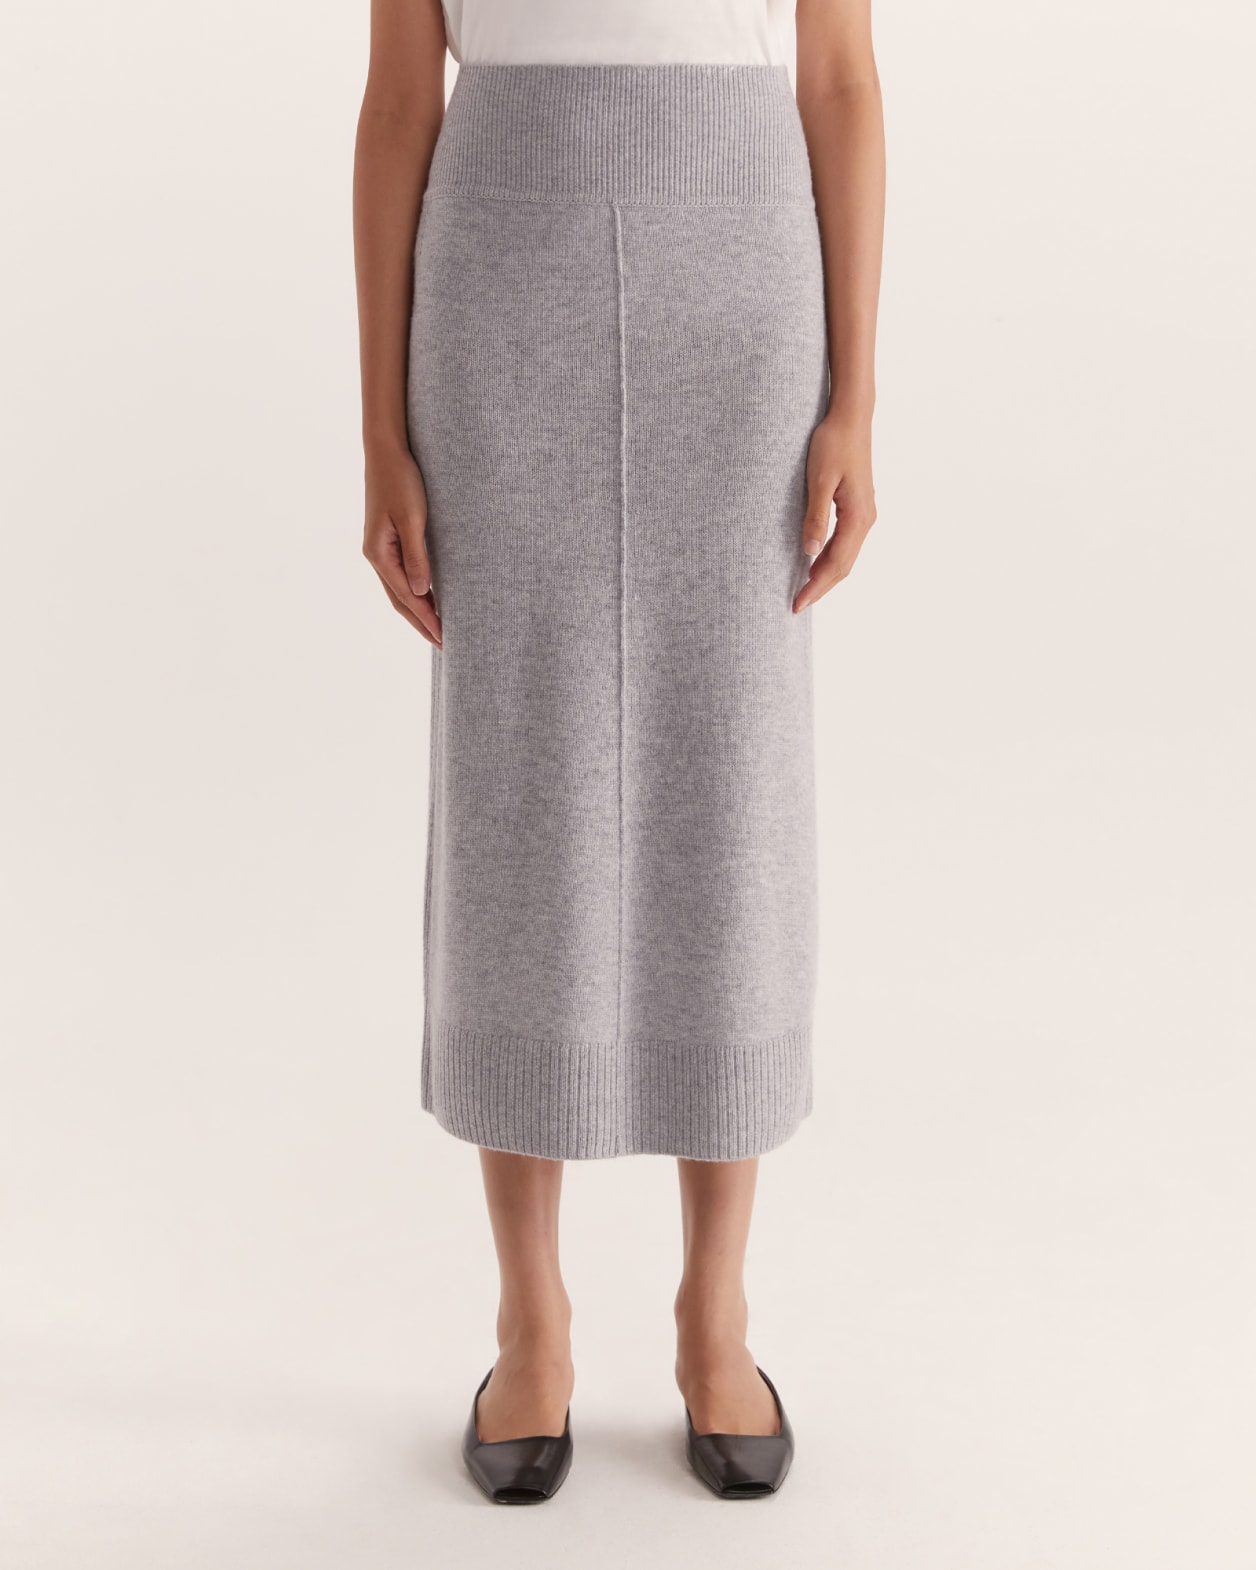 Nora Wool Cashmere Knit Skirt in GREY MELANGE